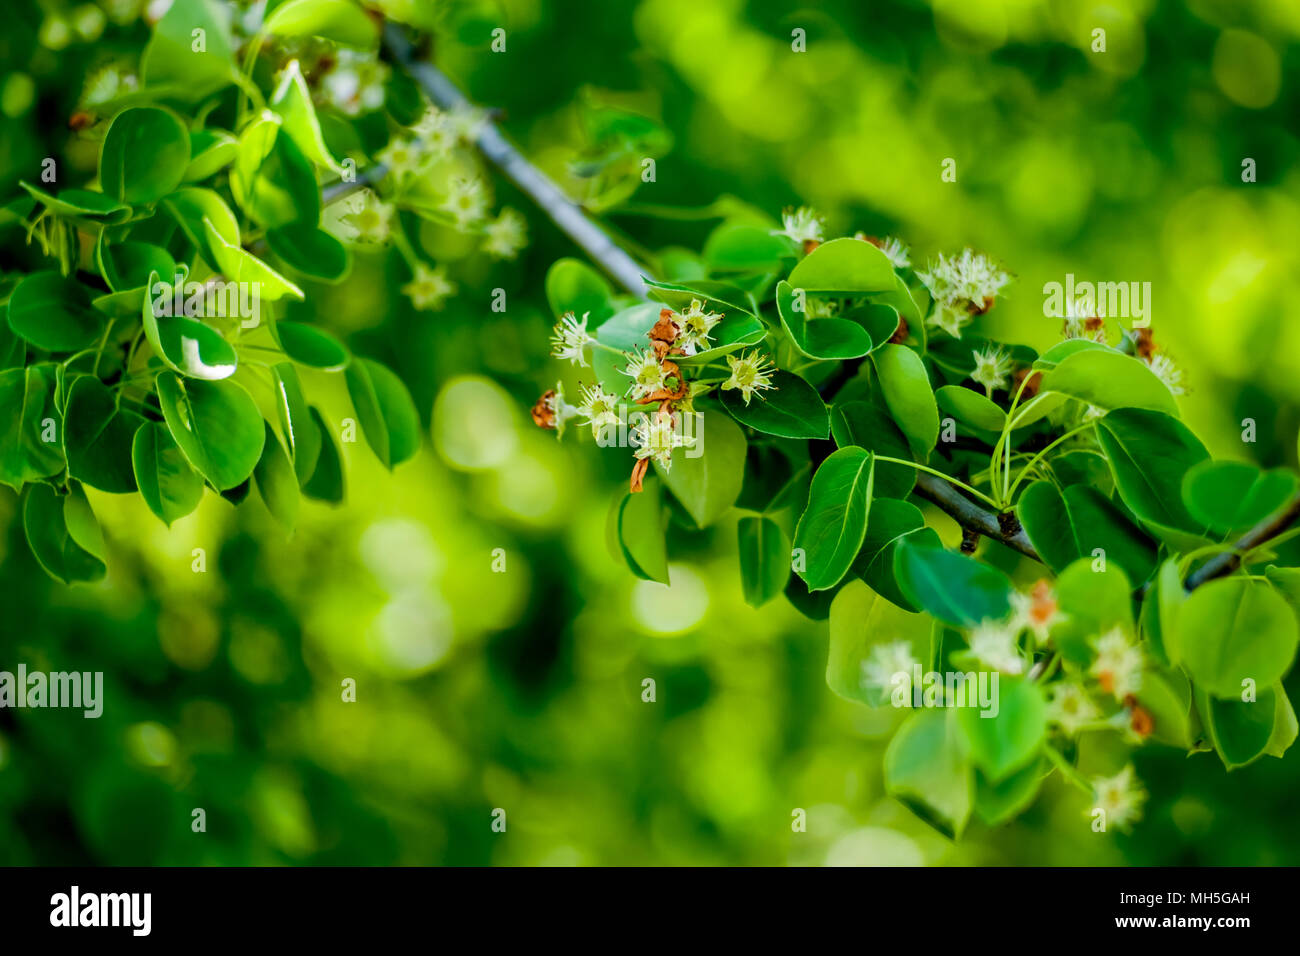 Verdurous Green Leaves, branch, tree, grass, light mint pattern apple apricot Stock Photo